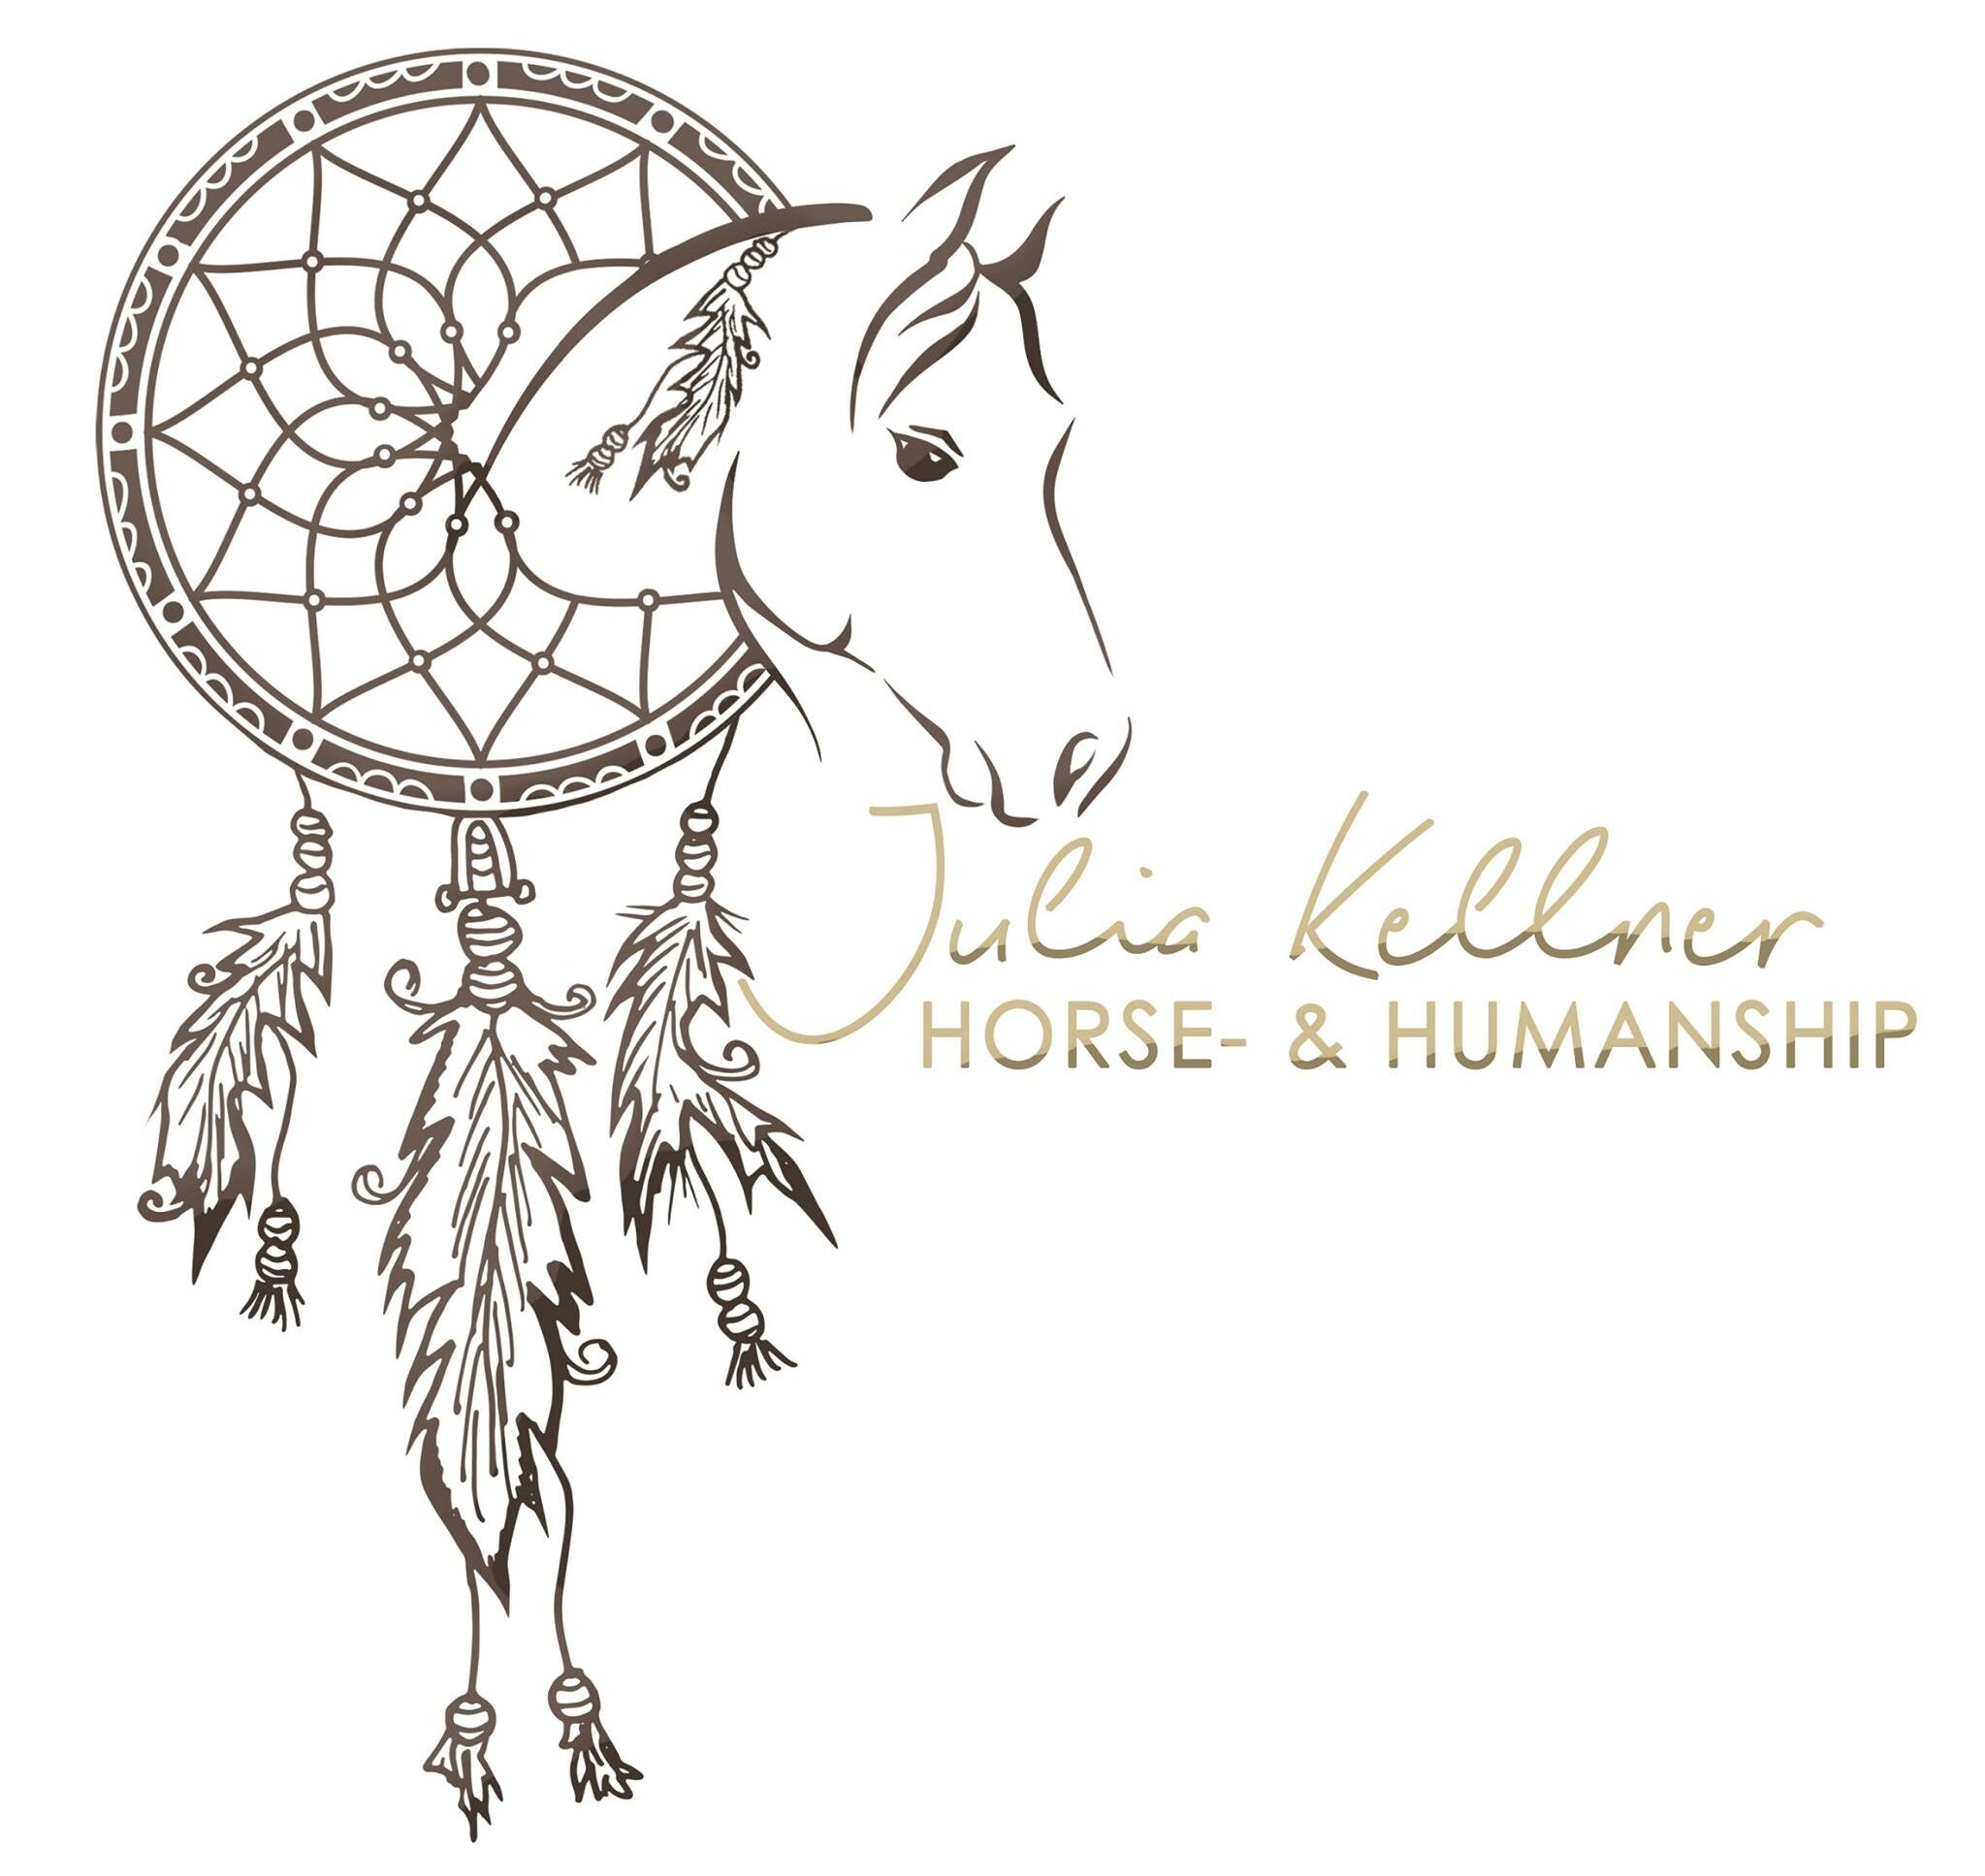 Julia Kellner Horse & Humanship